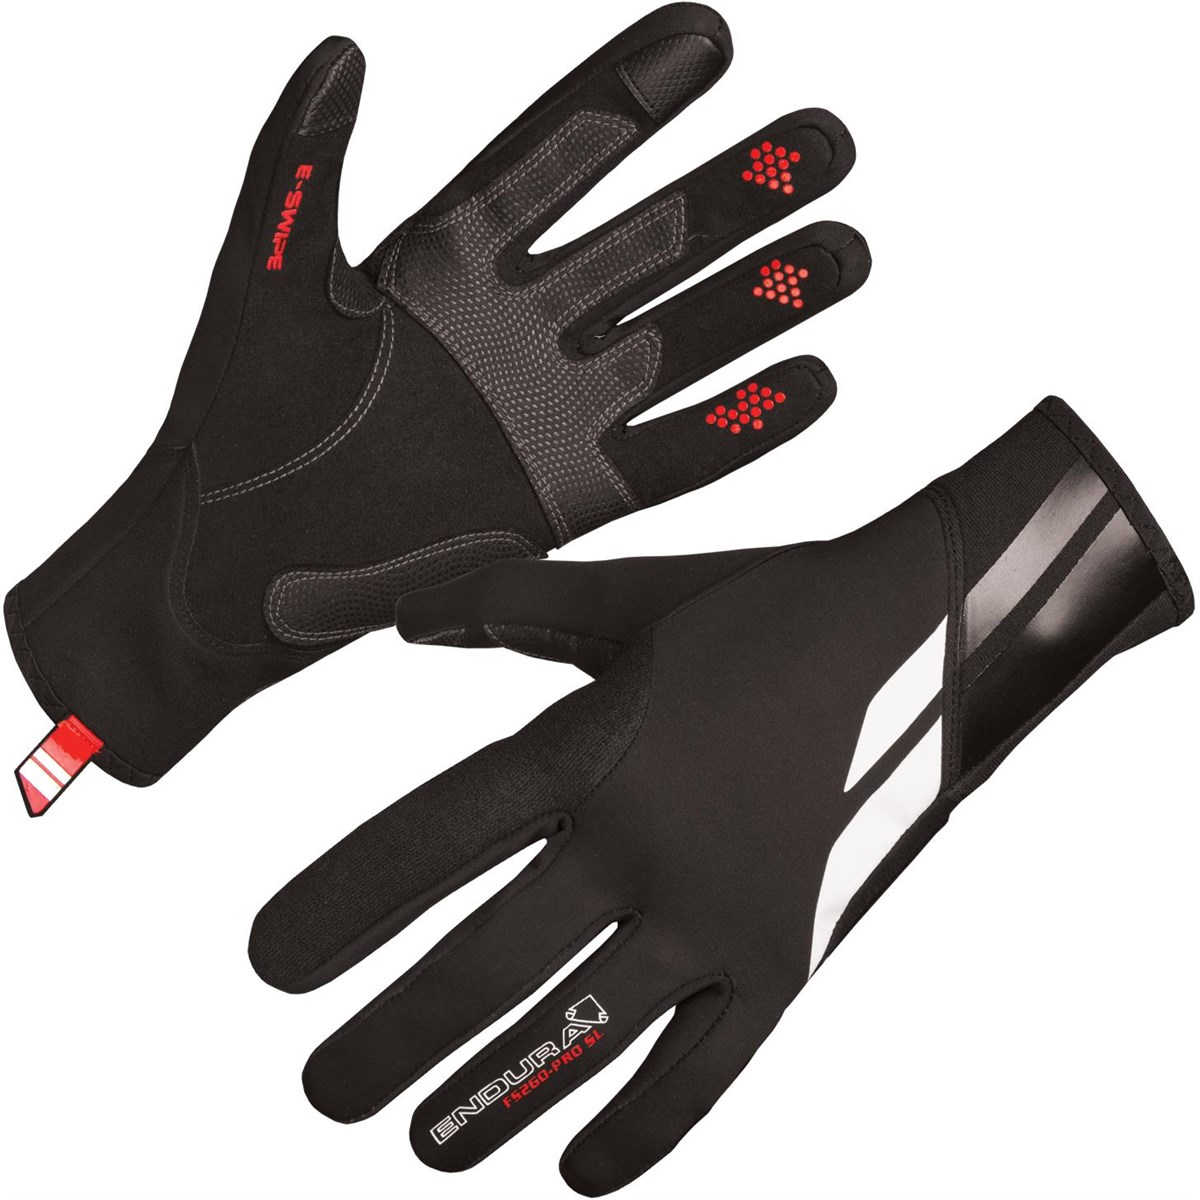 Endura Pro SL Windproof Long Finger Cycling Glove product image